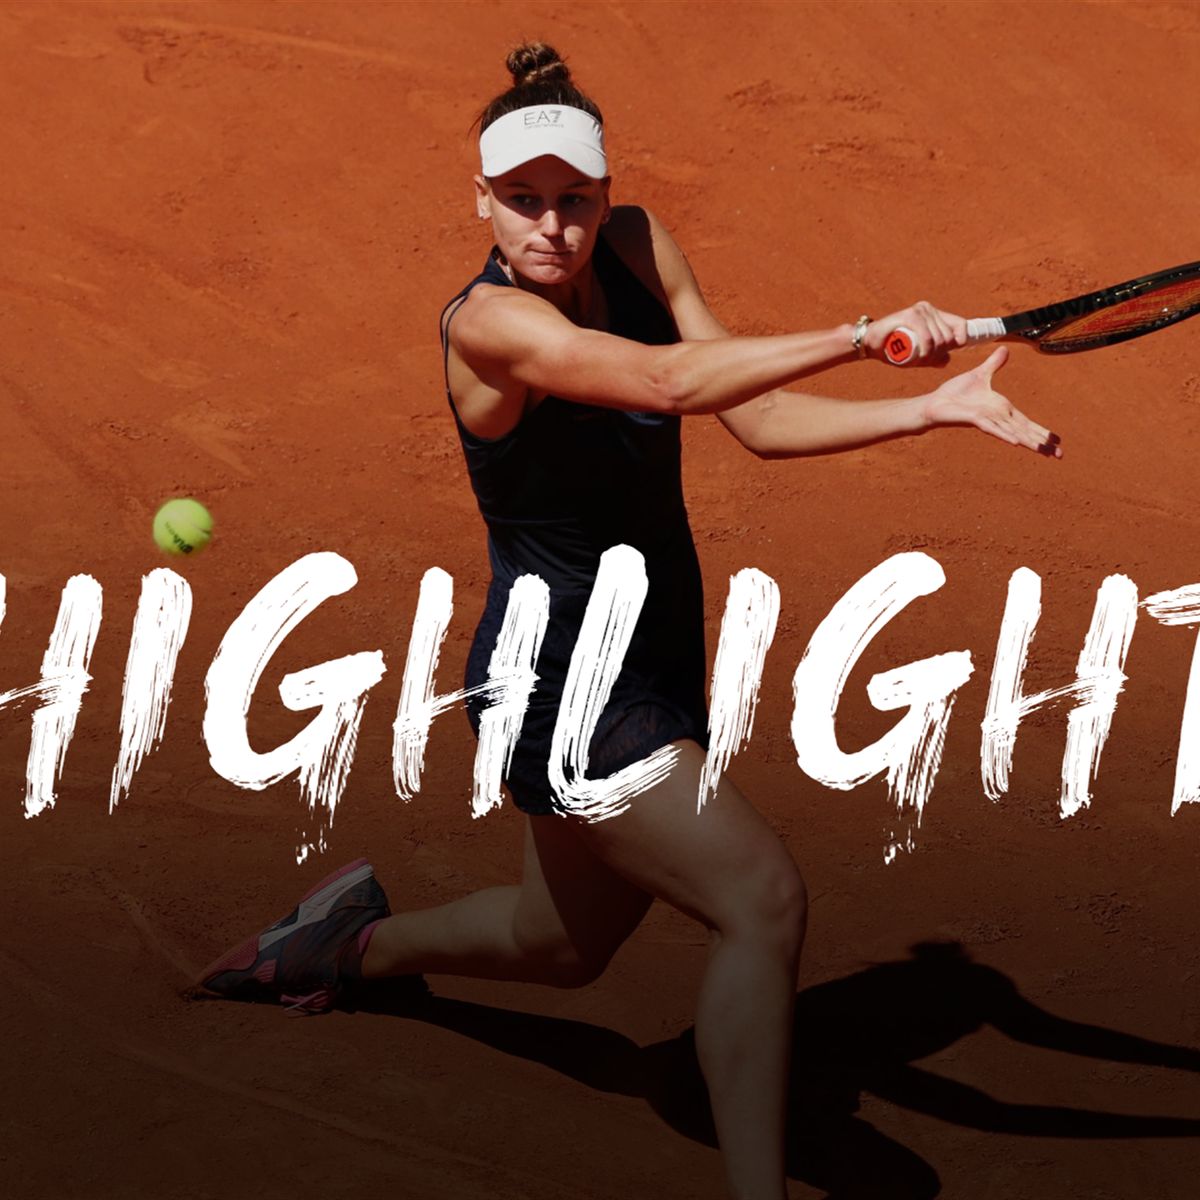 French Open 2022 Daria Kasatkina - Veronika Kudermetova Highlights - Viertelfinale Damen-Einzel - Tennis Video